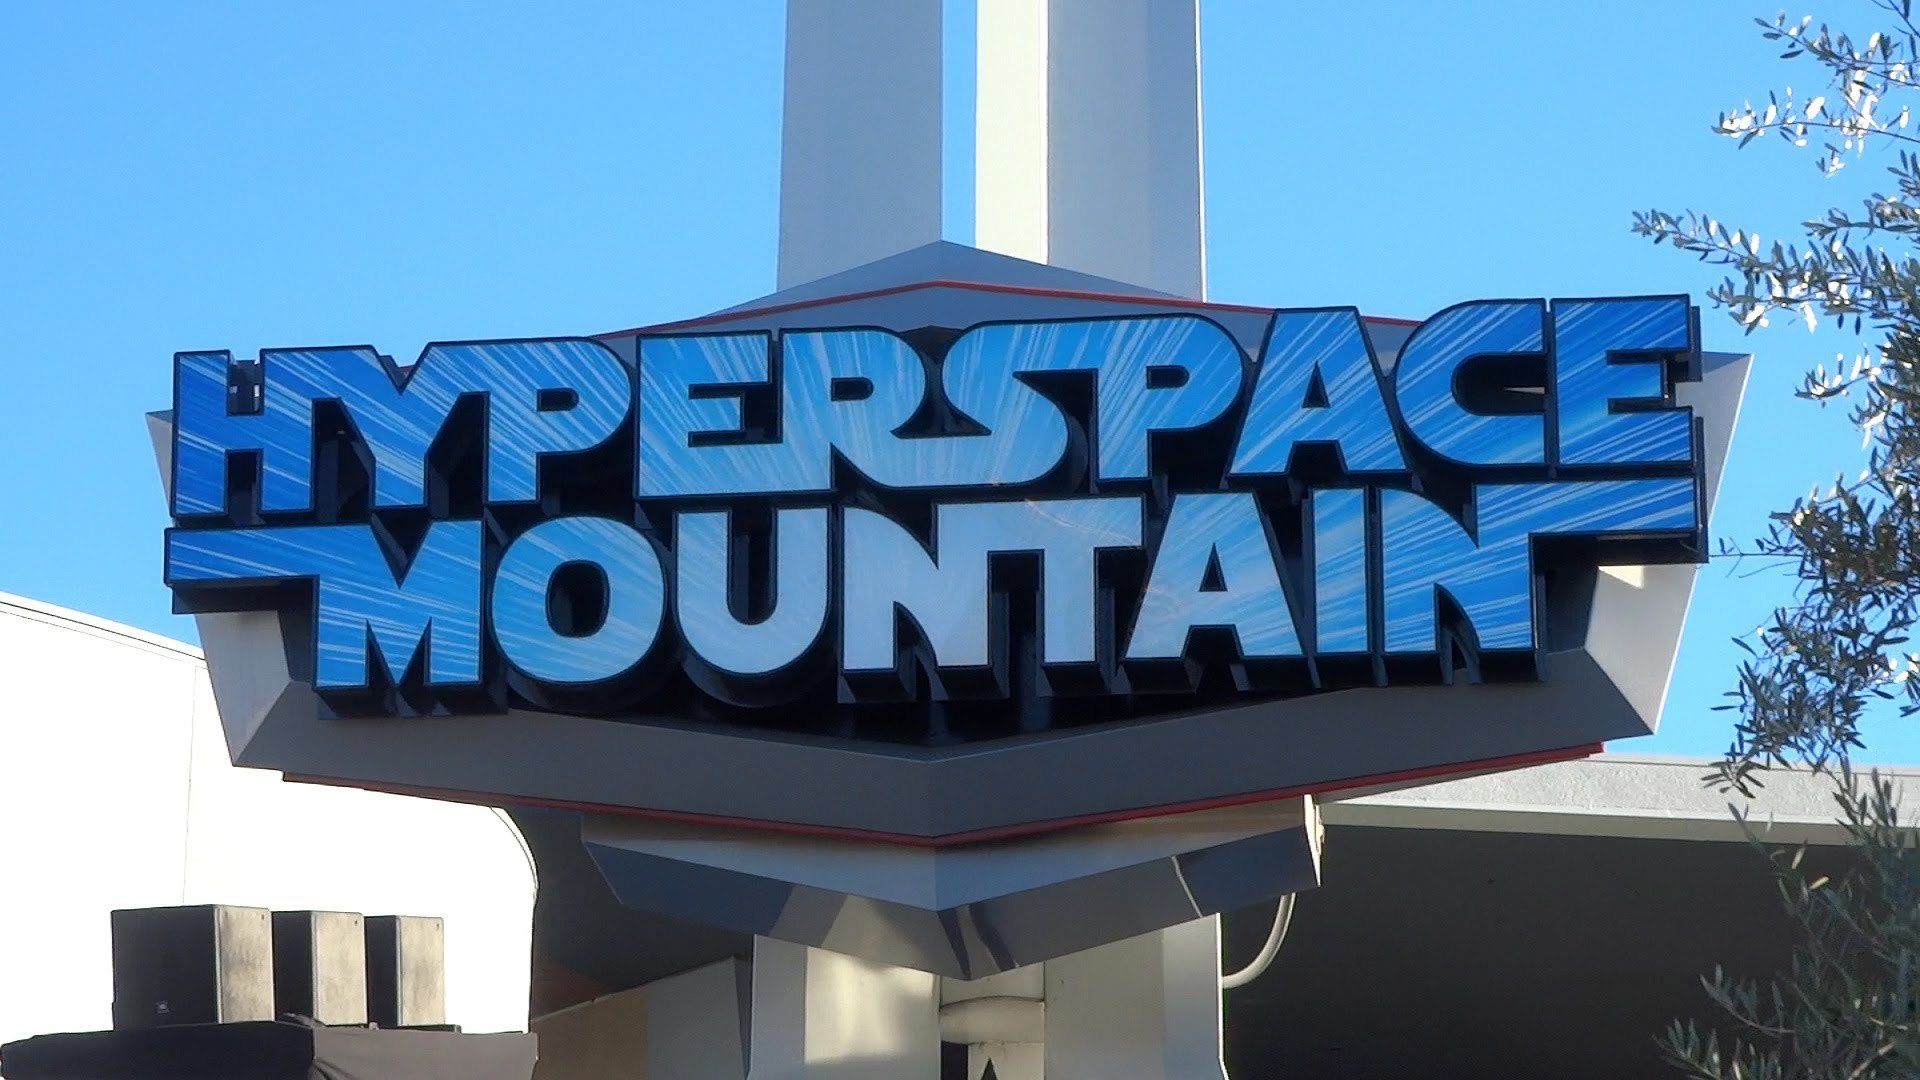 Hyperspace Mountain, la nouvelle attraction Star Wars de Disneyland Paris